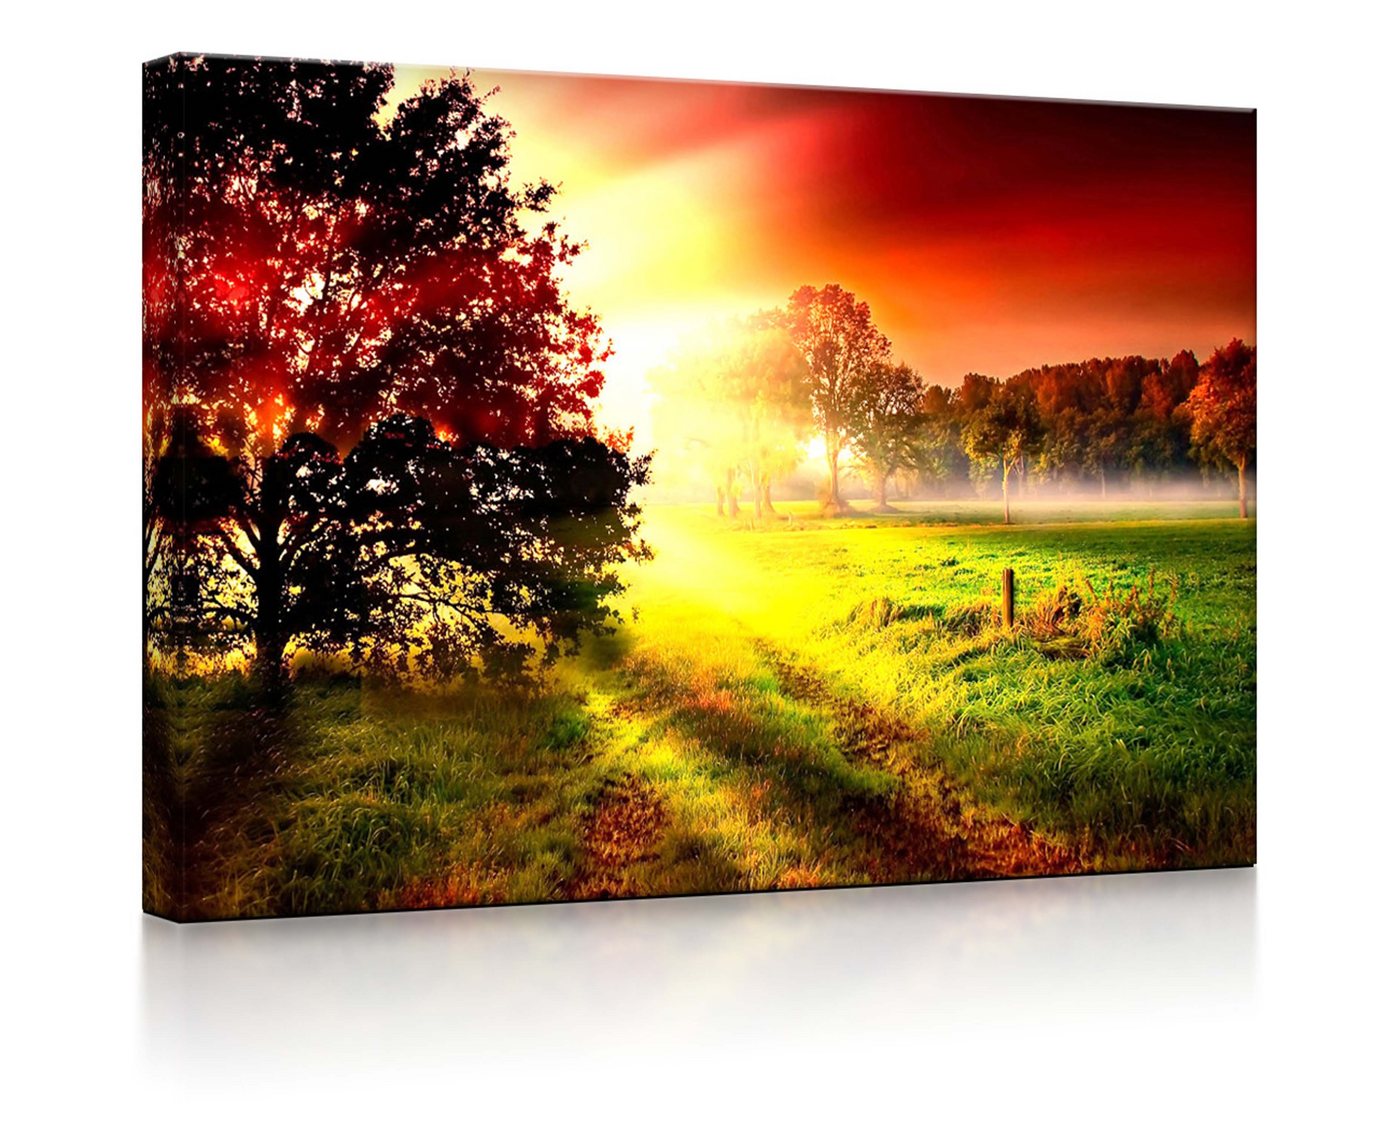 lightbox-multicolor LED-Bild Sonnenuntergang an nebliger Lichtung fully lighted / 60x40cm, Leuchtbild mit Fernbedienung von lightbox-multicolor